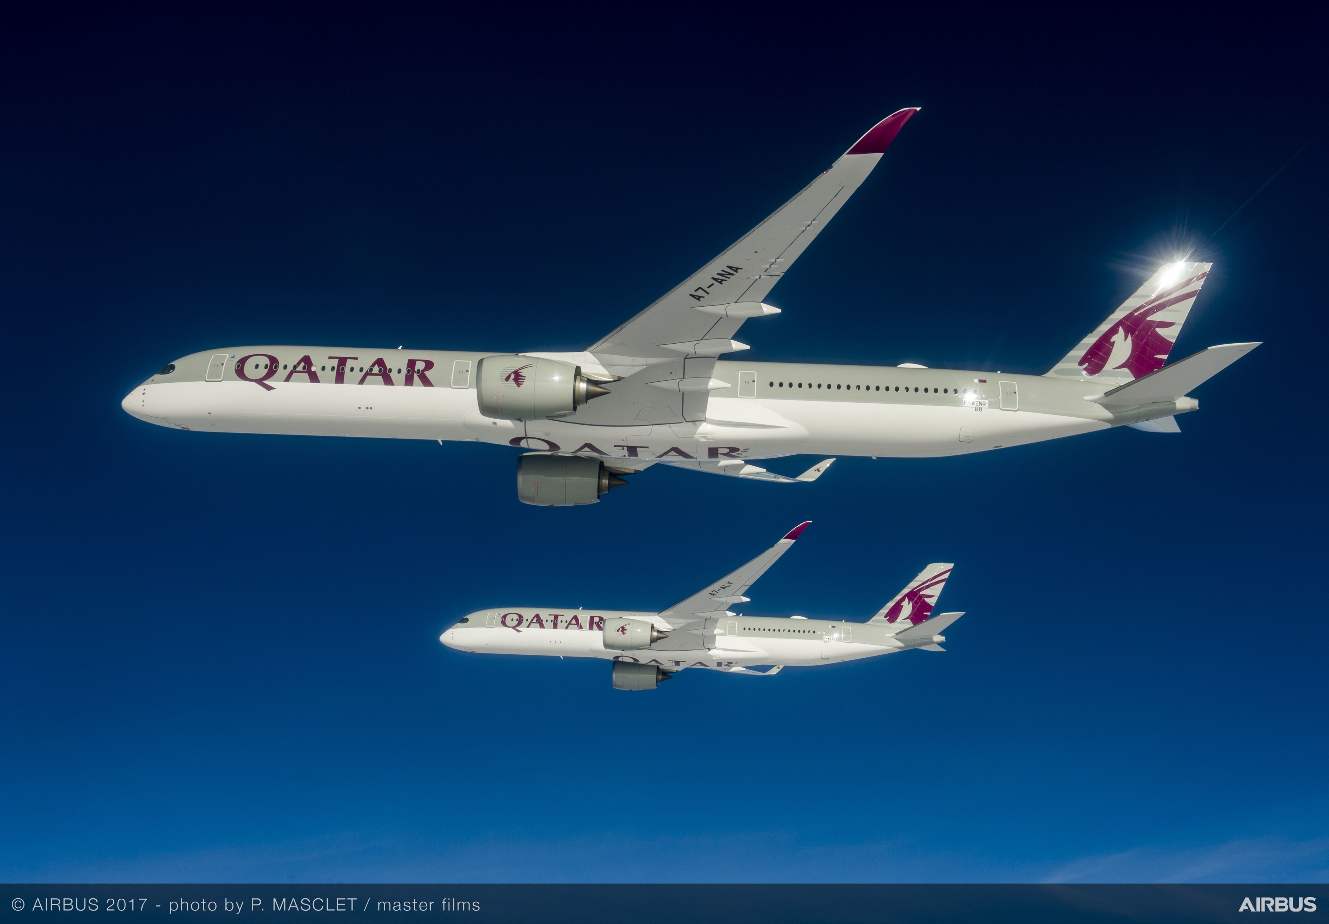 Qatar Airways first to receive Airbus A350-1000